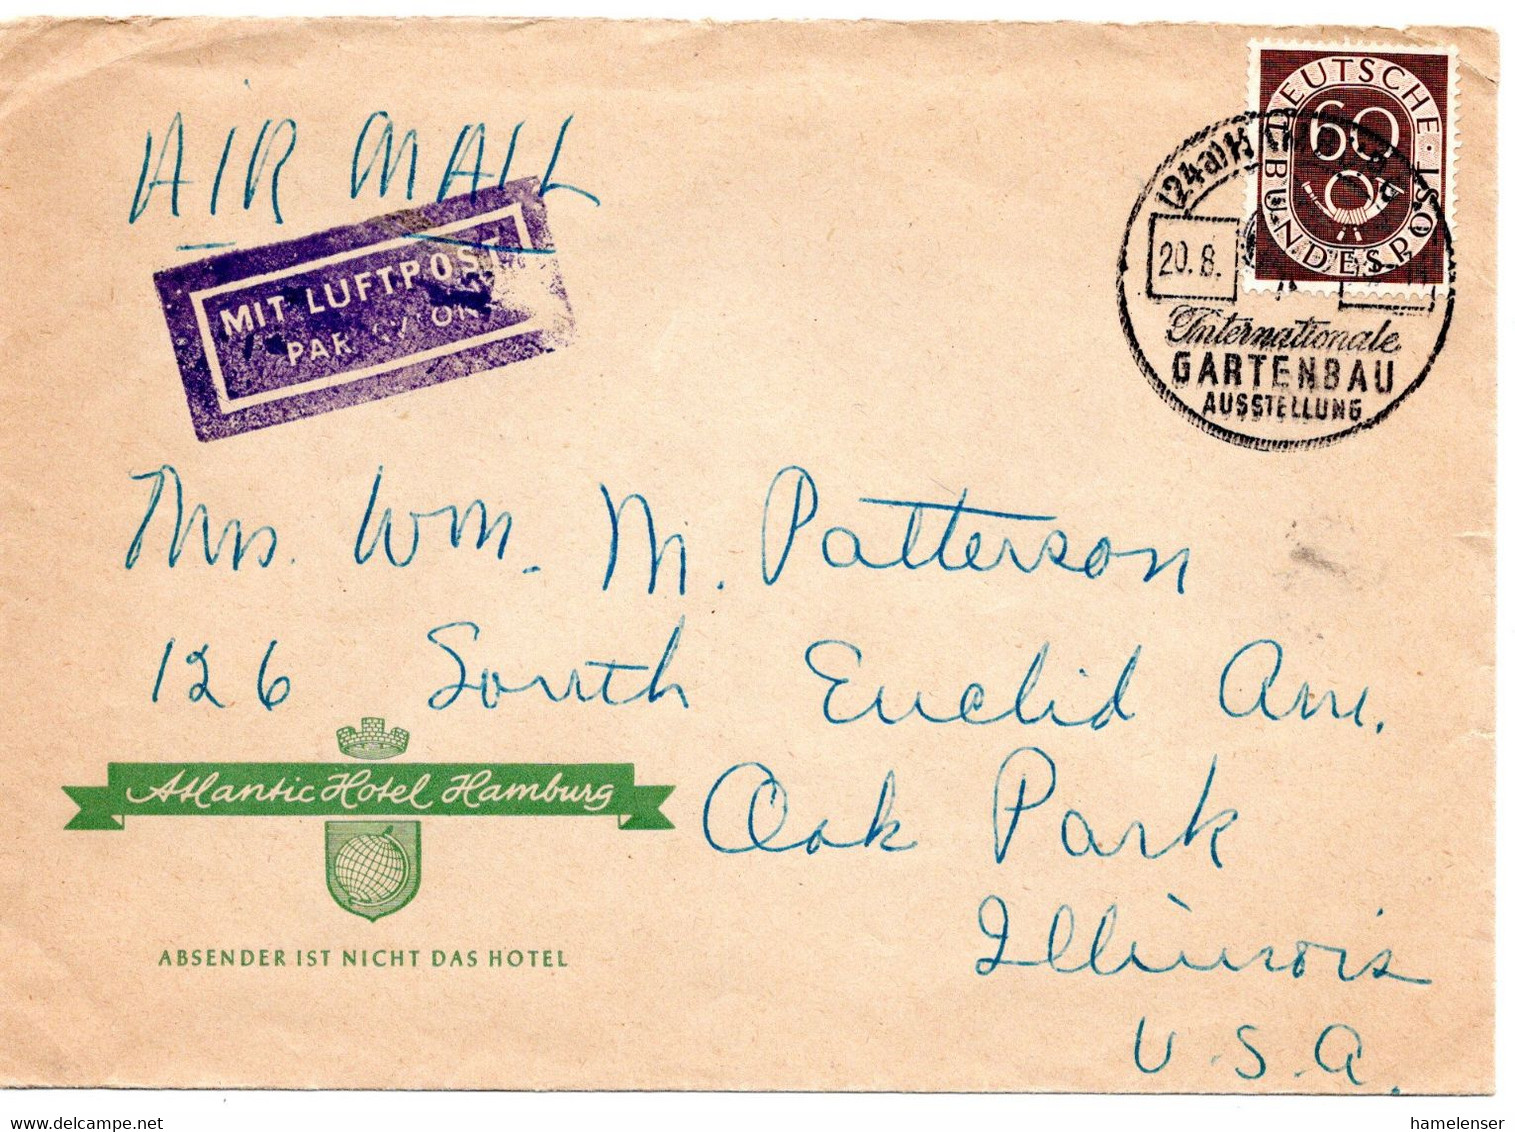 55680 - Bund - 1953 - 60Pfg. Posthorn EF A. LpBf. M. SoStpl. HAMBURG - GARTENBAUAUSSTELLUNG -> Oak Park, IL (USA) - Briefe U. Dokumente